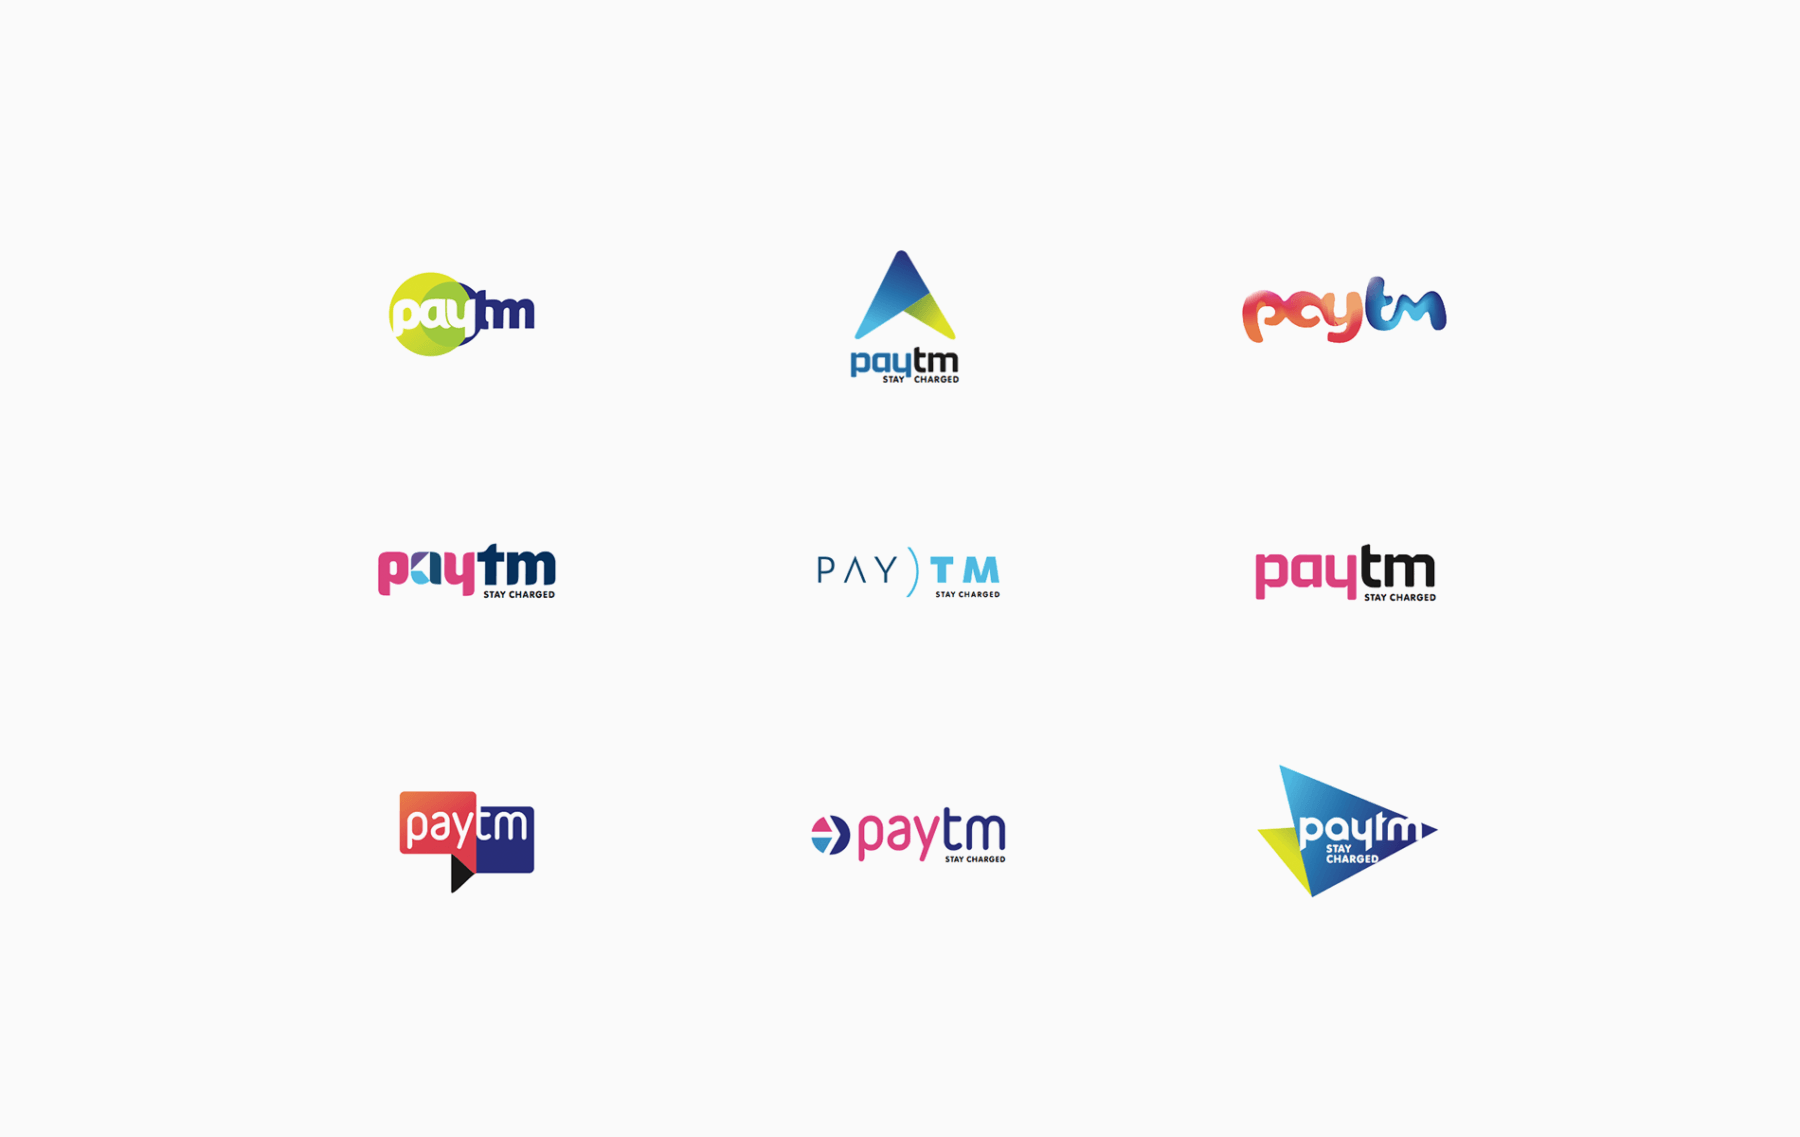 Paytm Logo - PayTM logo design. PayTM is one of the fastest growing brands of India